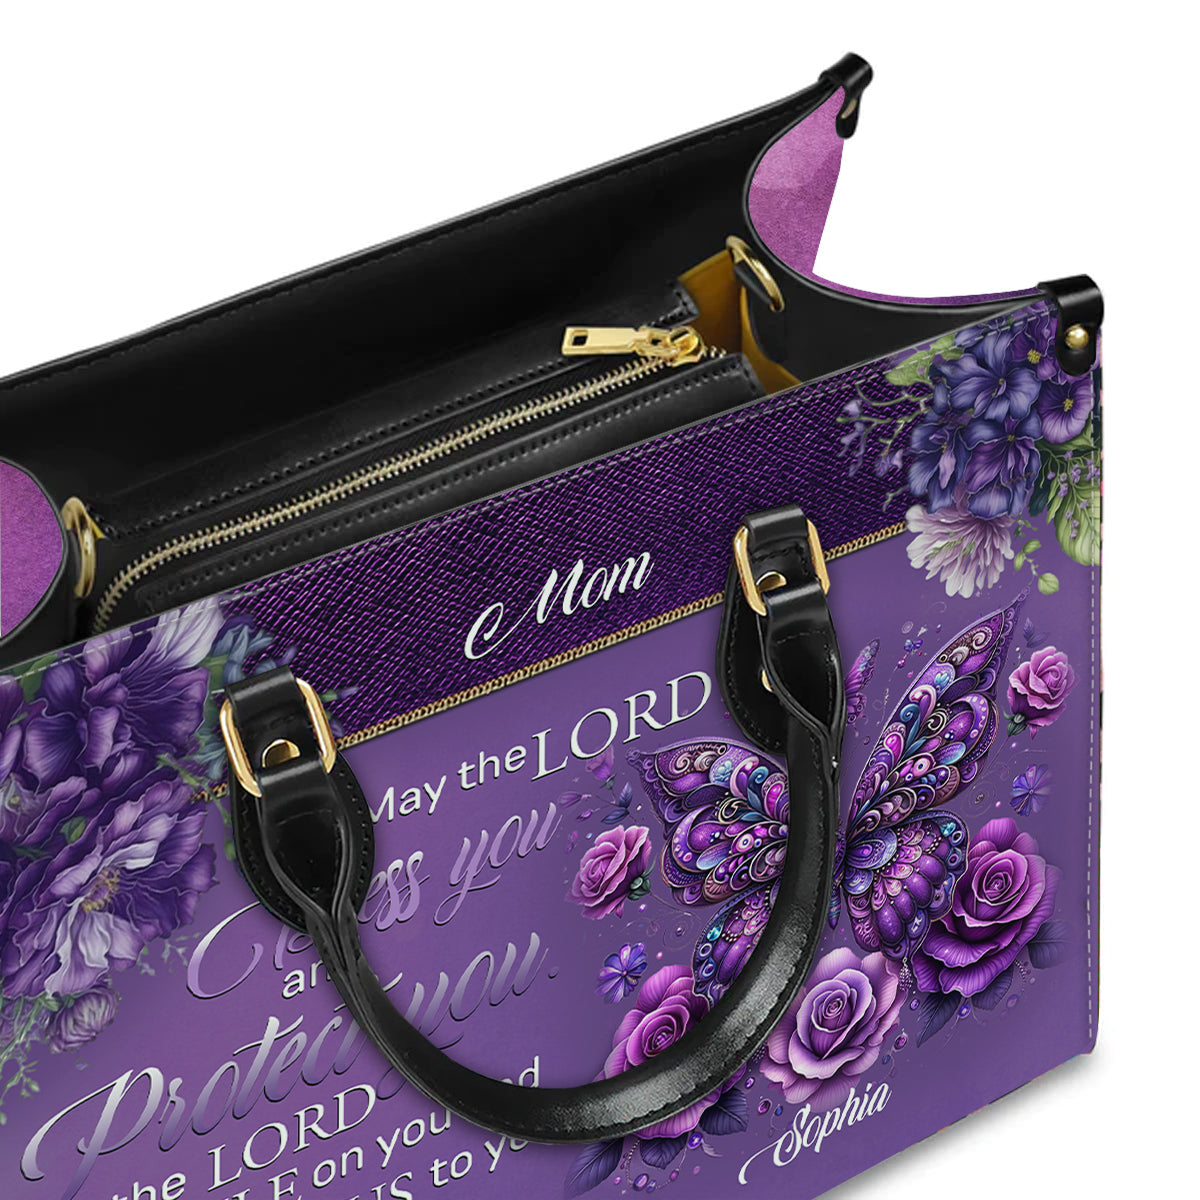 Custom Engraved Leather Handbag - Elegance & Faith Combined - CHRISTIANARTBAG CABLTHB01070424.